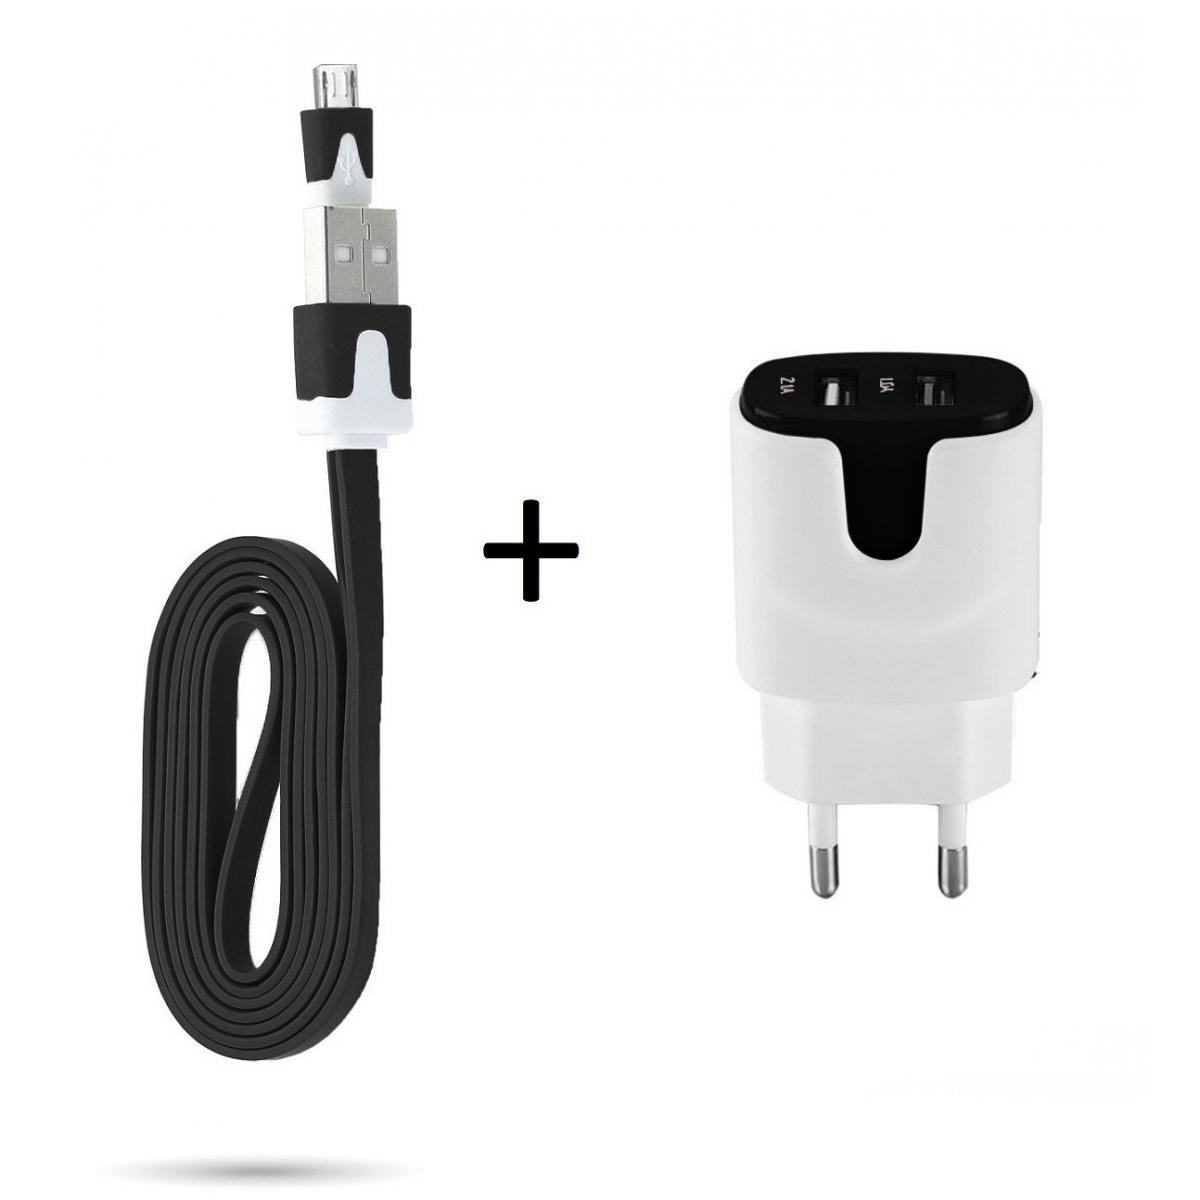 Shot - Pack Chargeur pour ALCATEL 1 2019 Smartphone Micro USB (Cable Noodle 1m Chargeur + Double Prise Secteur Couleur USB) (NOIR) - Chargeur secteur téléphone